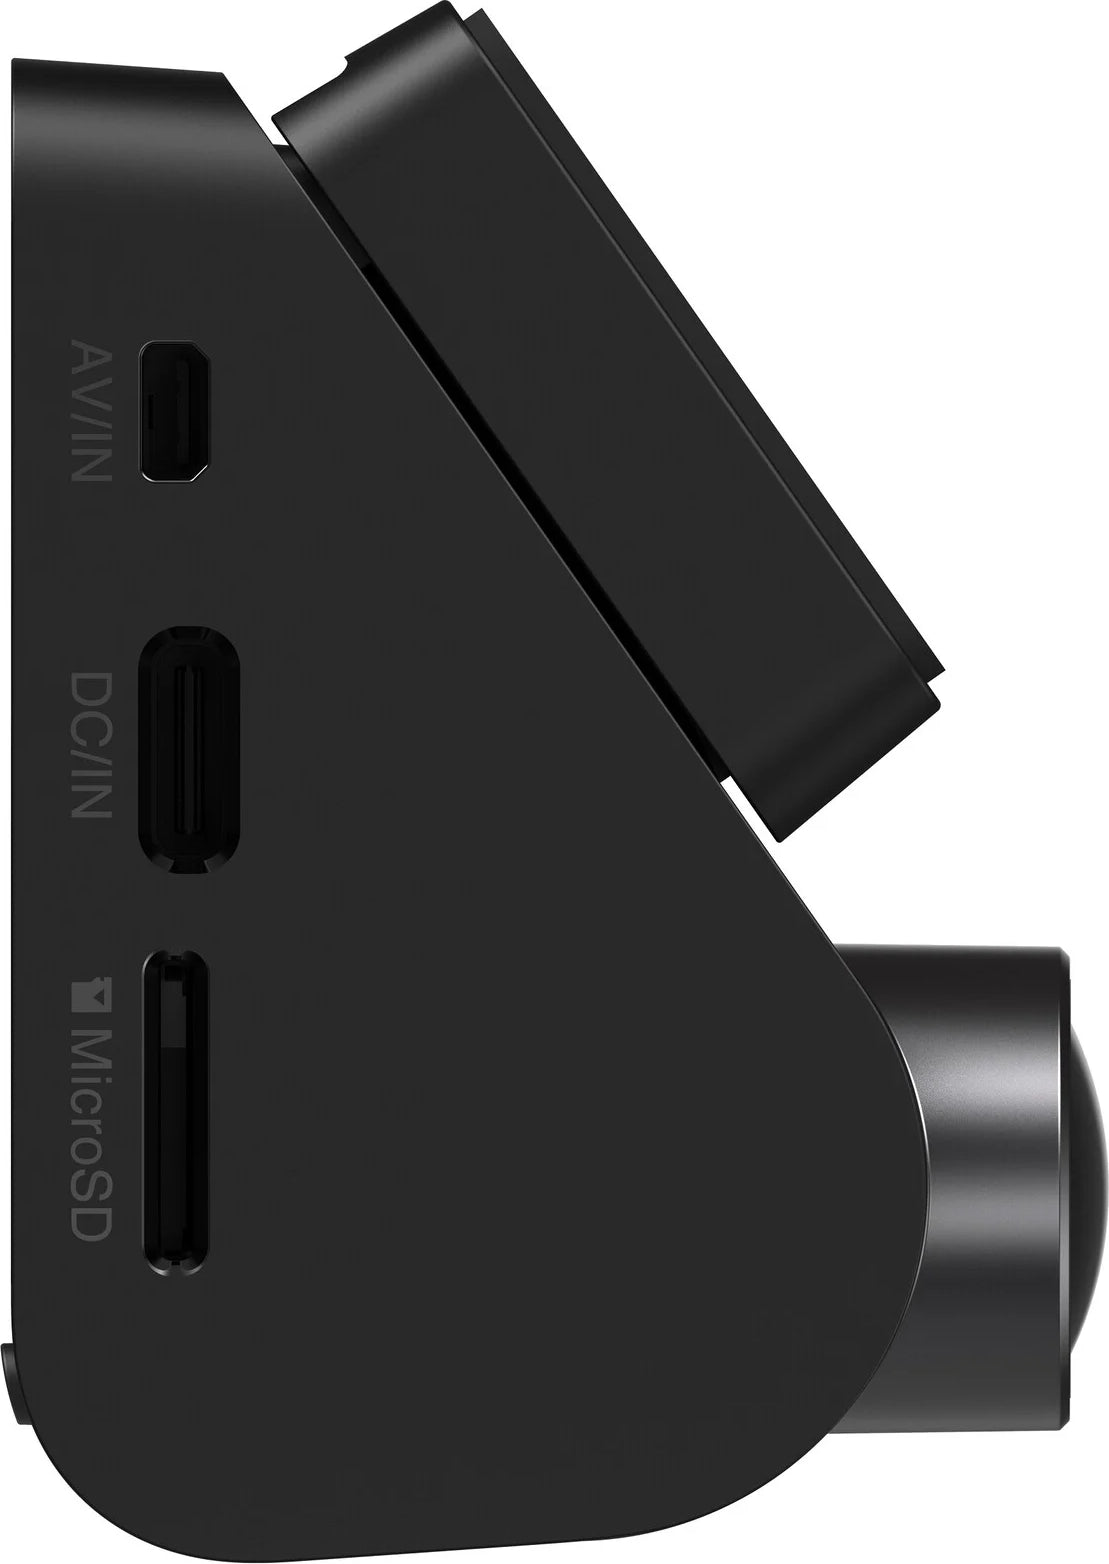 70mai 4K A810 HDR Dash Cam with RC12 Rear Cam Set